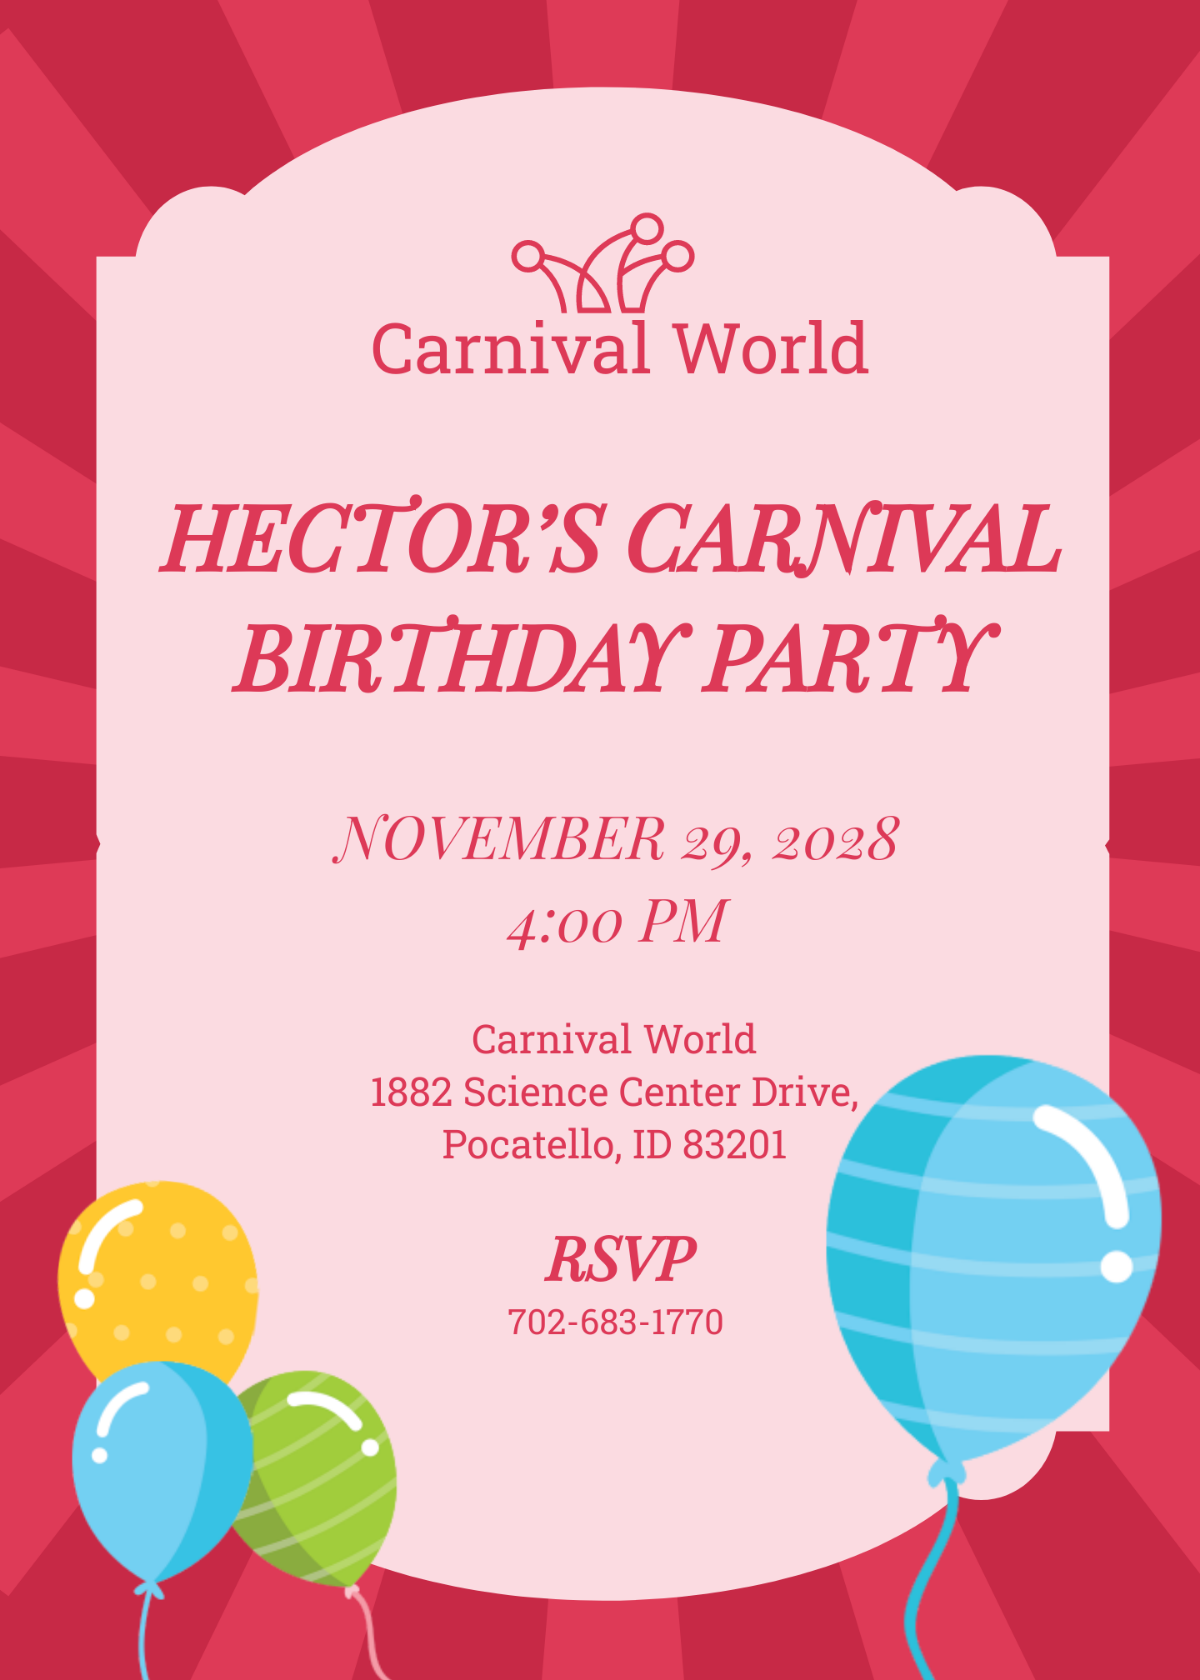 Carnival Birthday Party Invitation Template